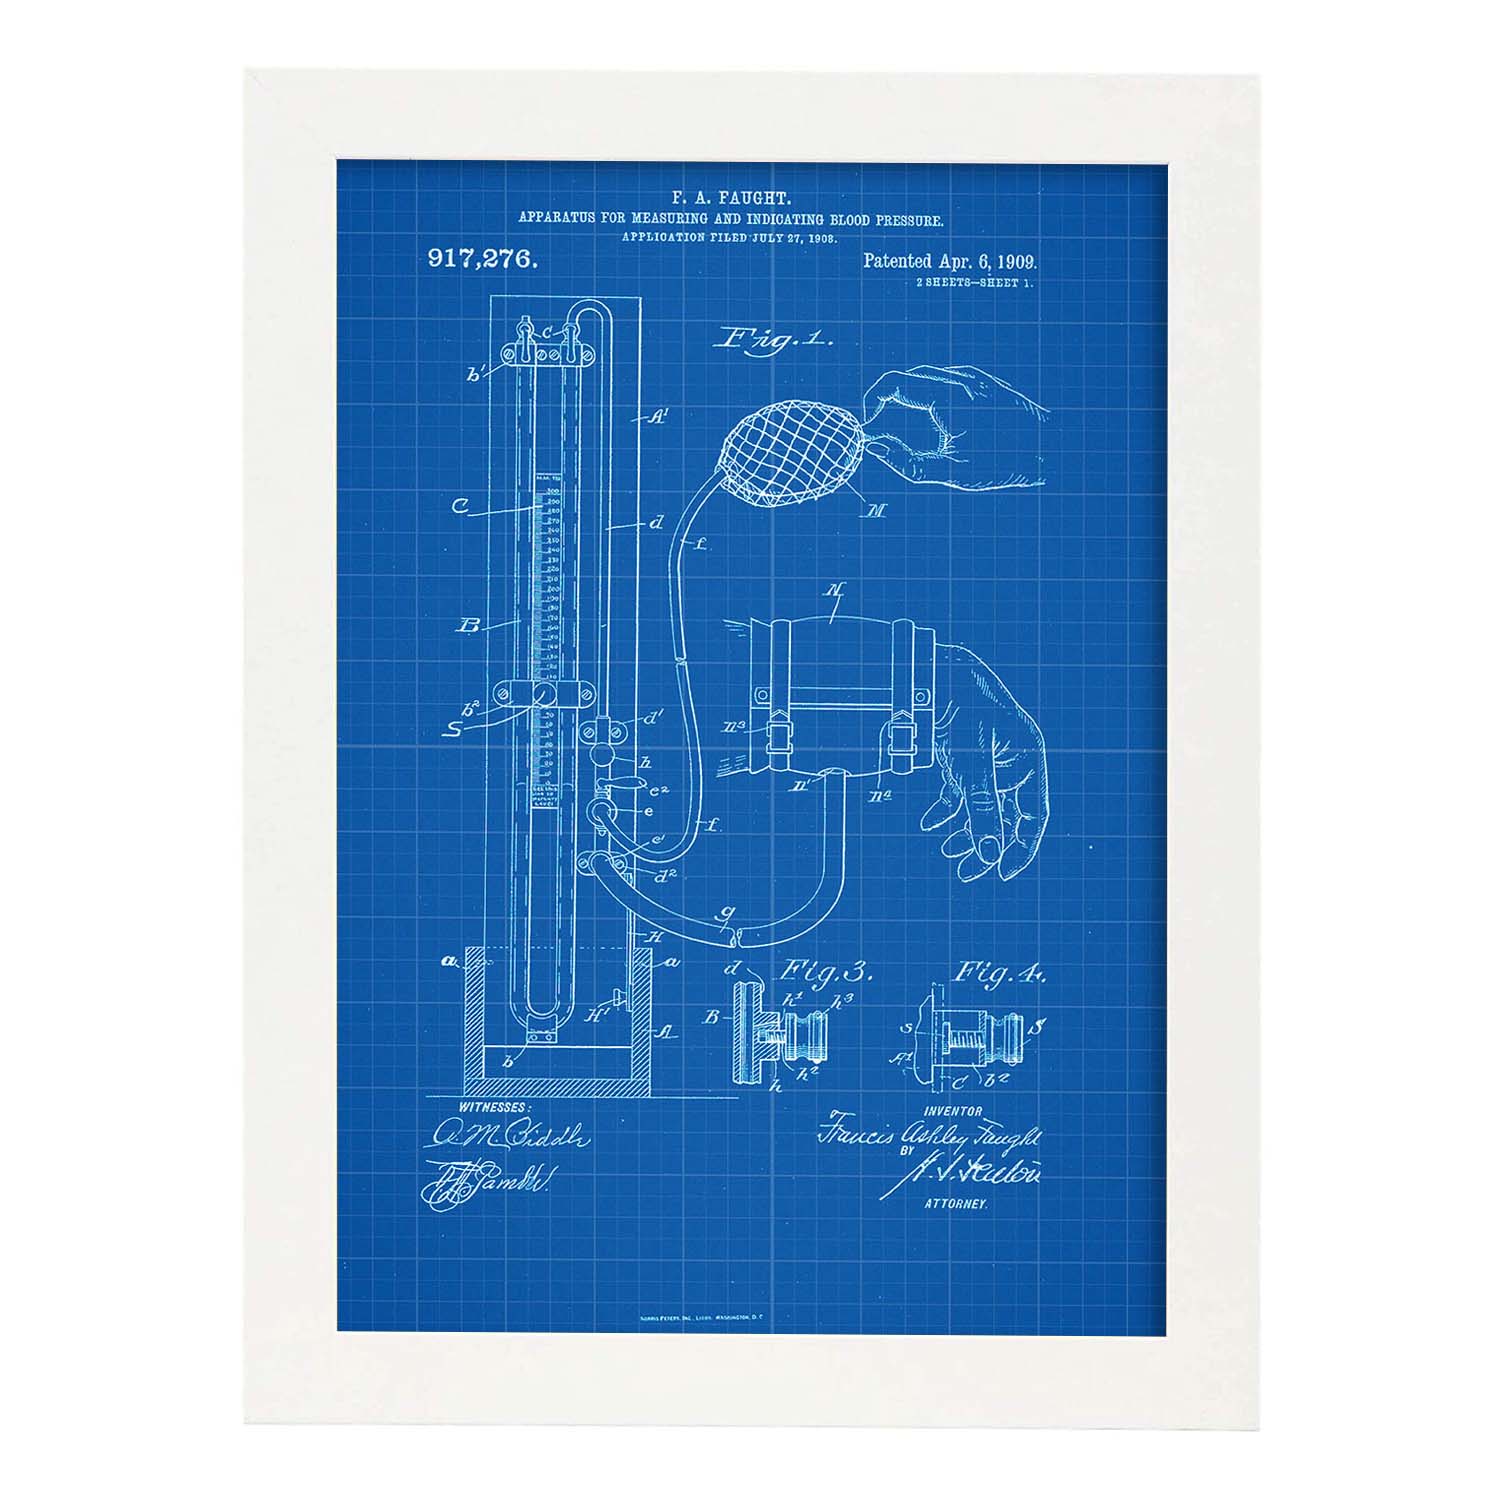 Poster con patente de Esfigmomanómetro. Lámina con diseño de patente antigua-Artwork-Nacnic-A4-Marco Blanco-Nacnic Estudio SL